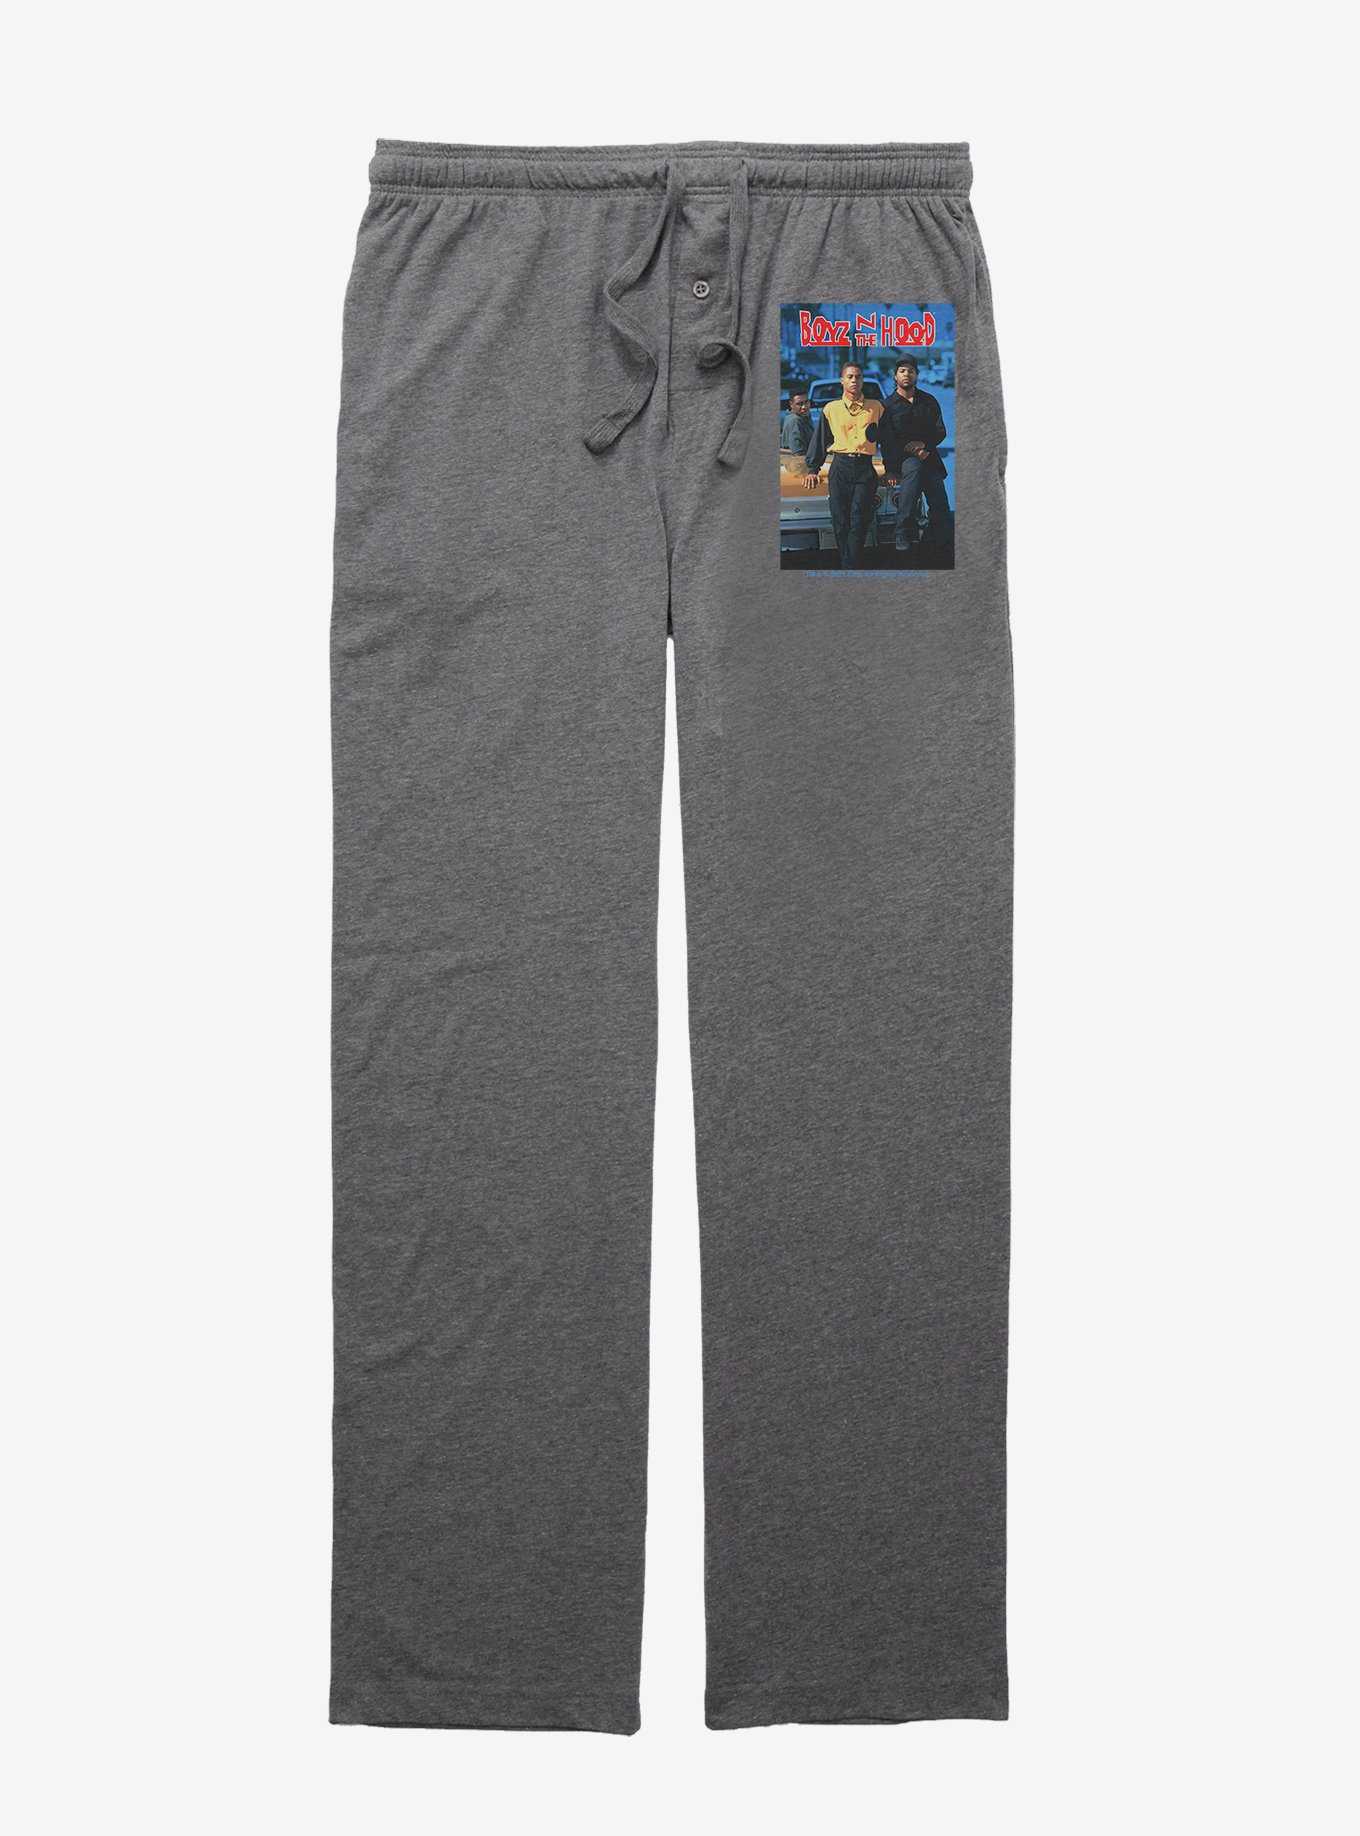 Boyz N The Hood Movie Poster Pajama Pants, GRAPHITE HEATHER, hi-res